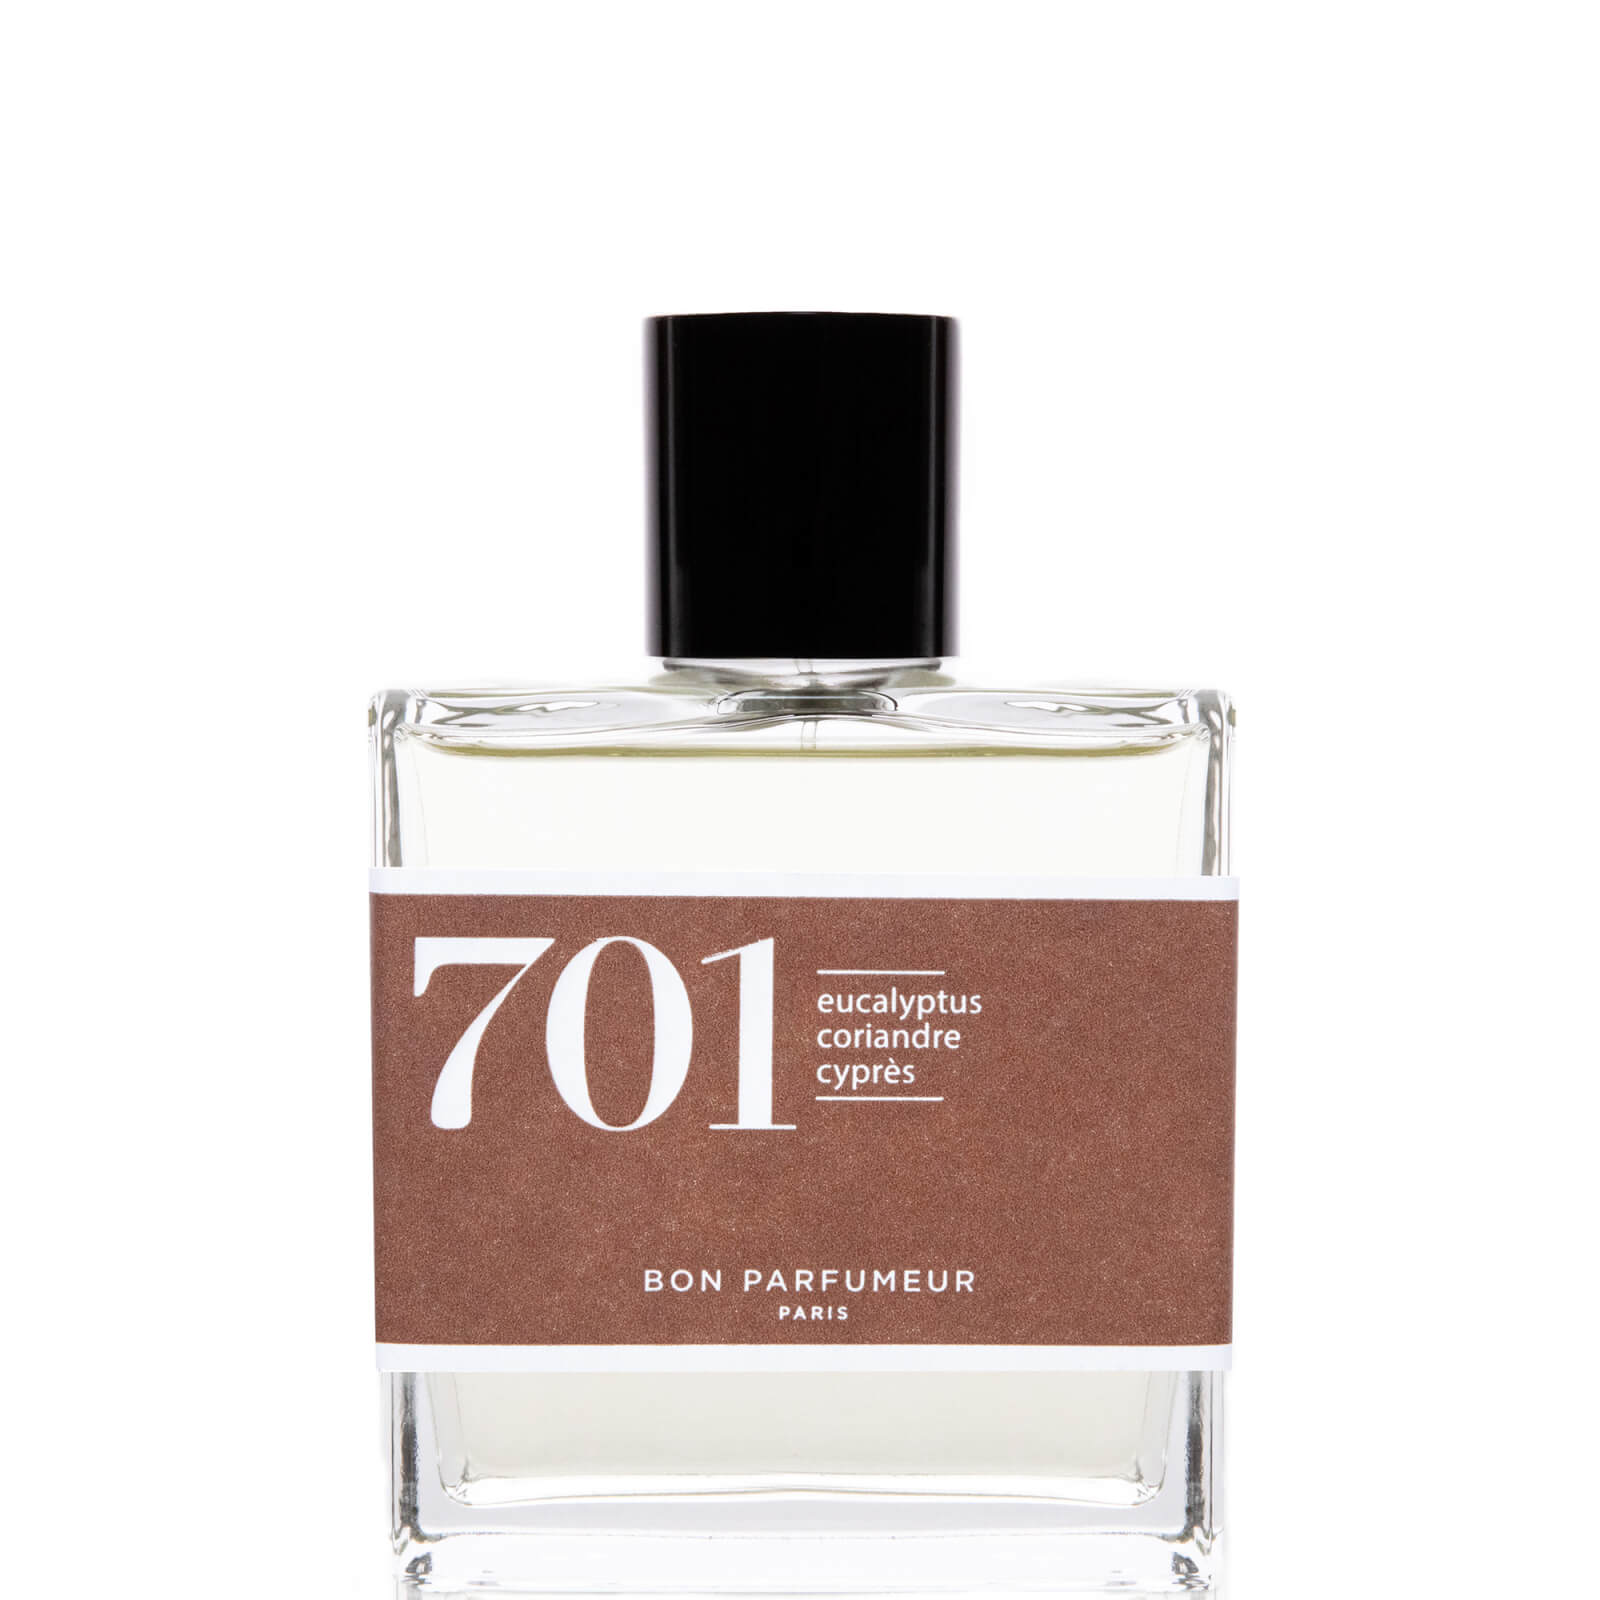 Image of Bon Parfumeur 701 Eucalipto Coriandolo Cypresso Eau de Parfum - 100ml